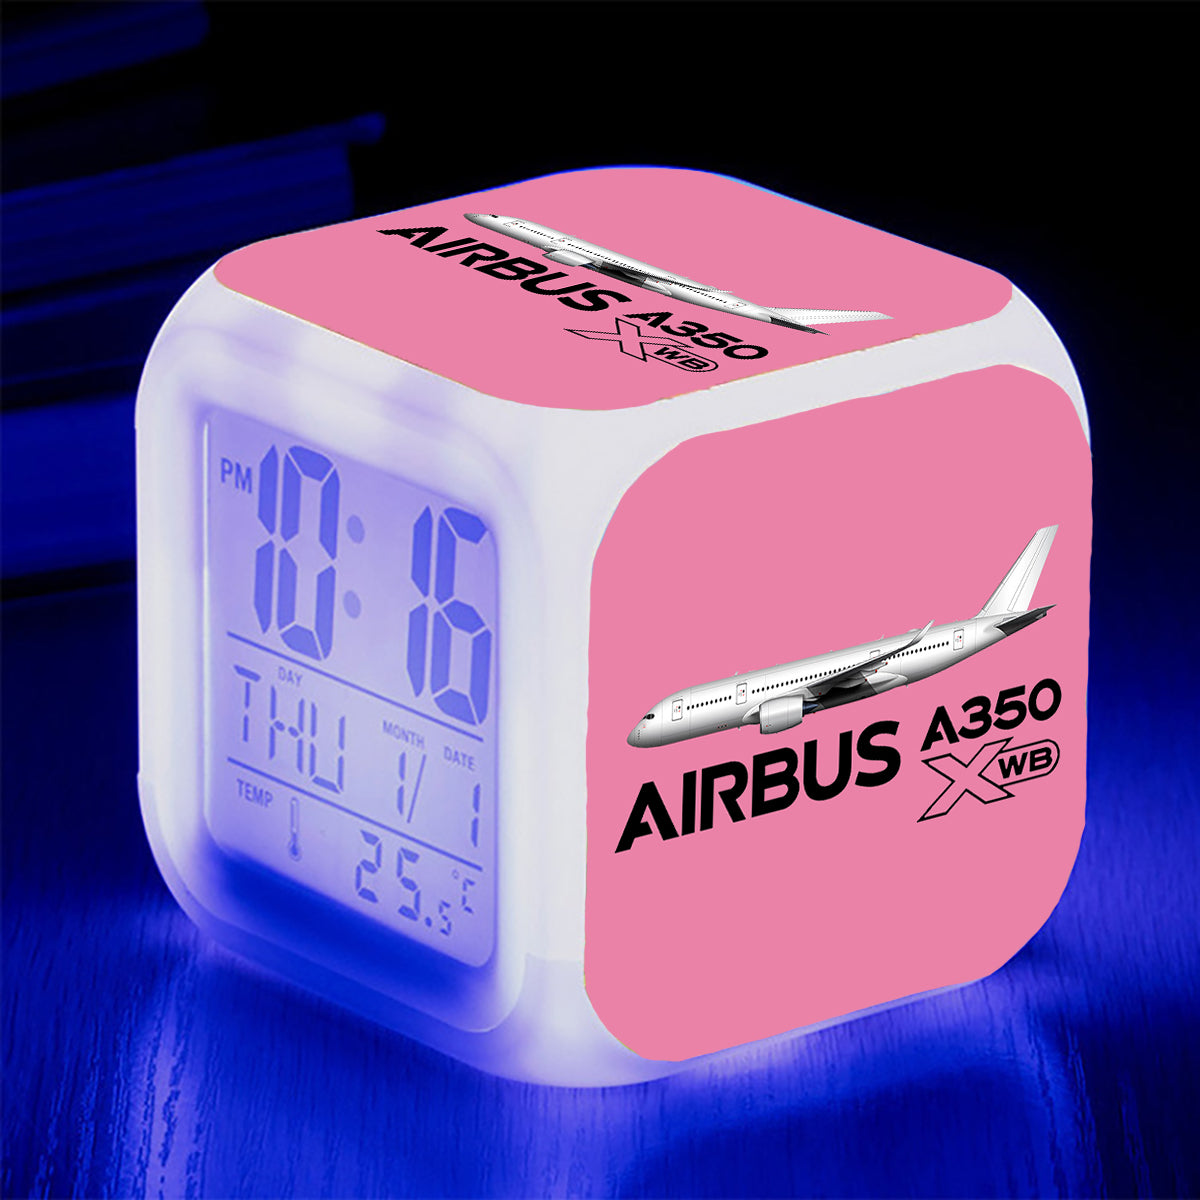 The Airbus A350 WXB Designed "7 Colour" Digital Alarm Clock